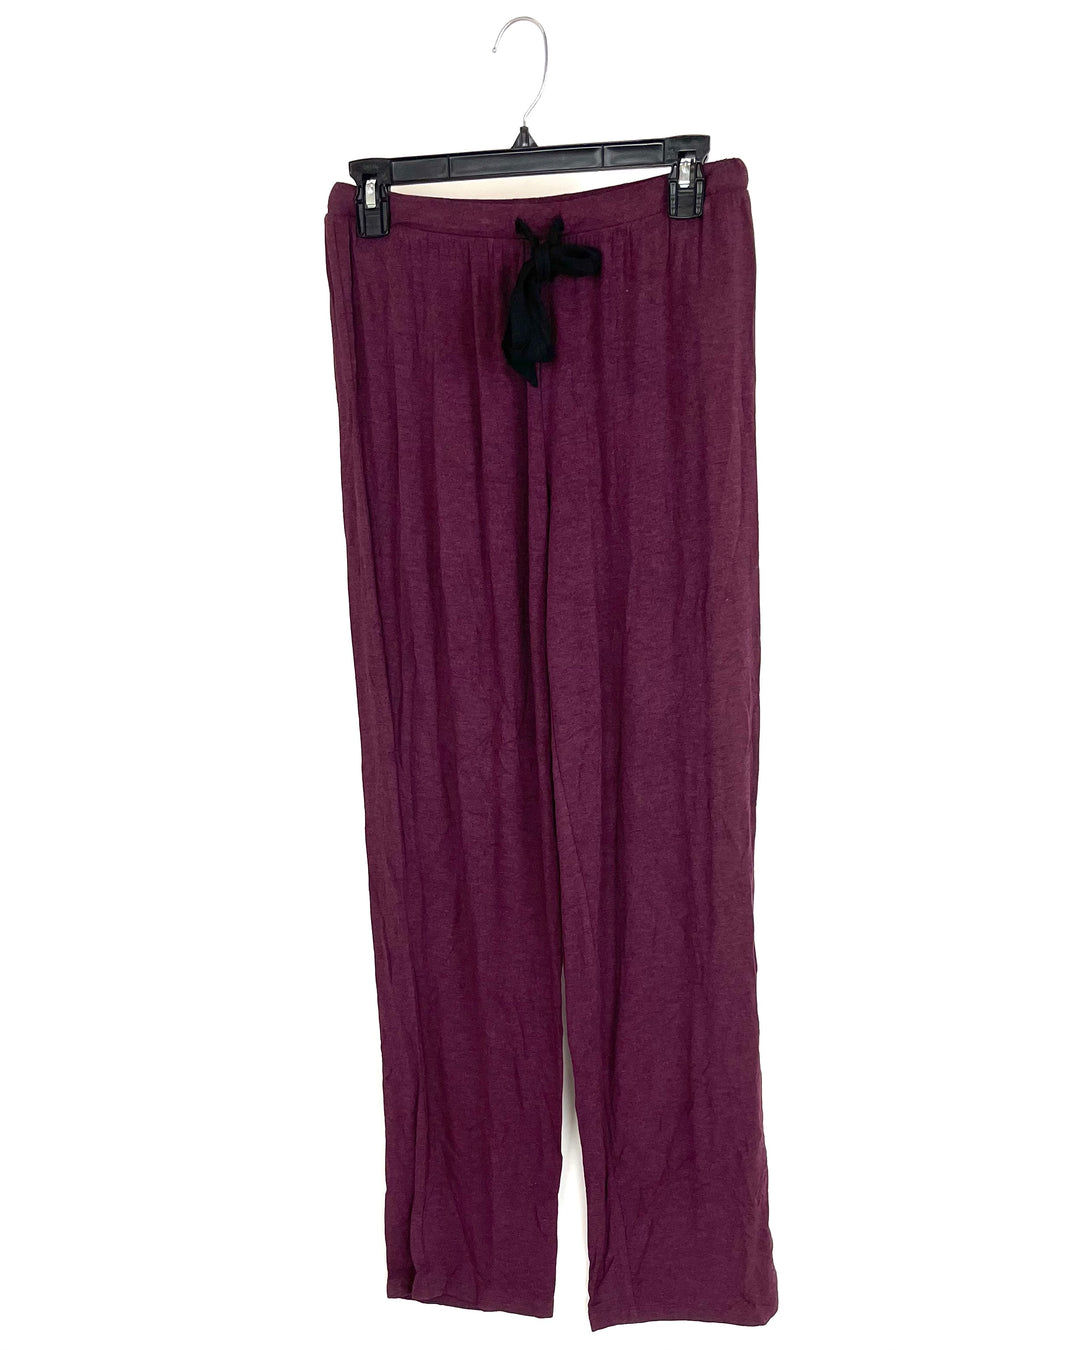 Dark Purple Loungewear Set - Size Small